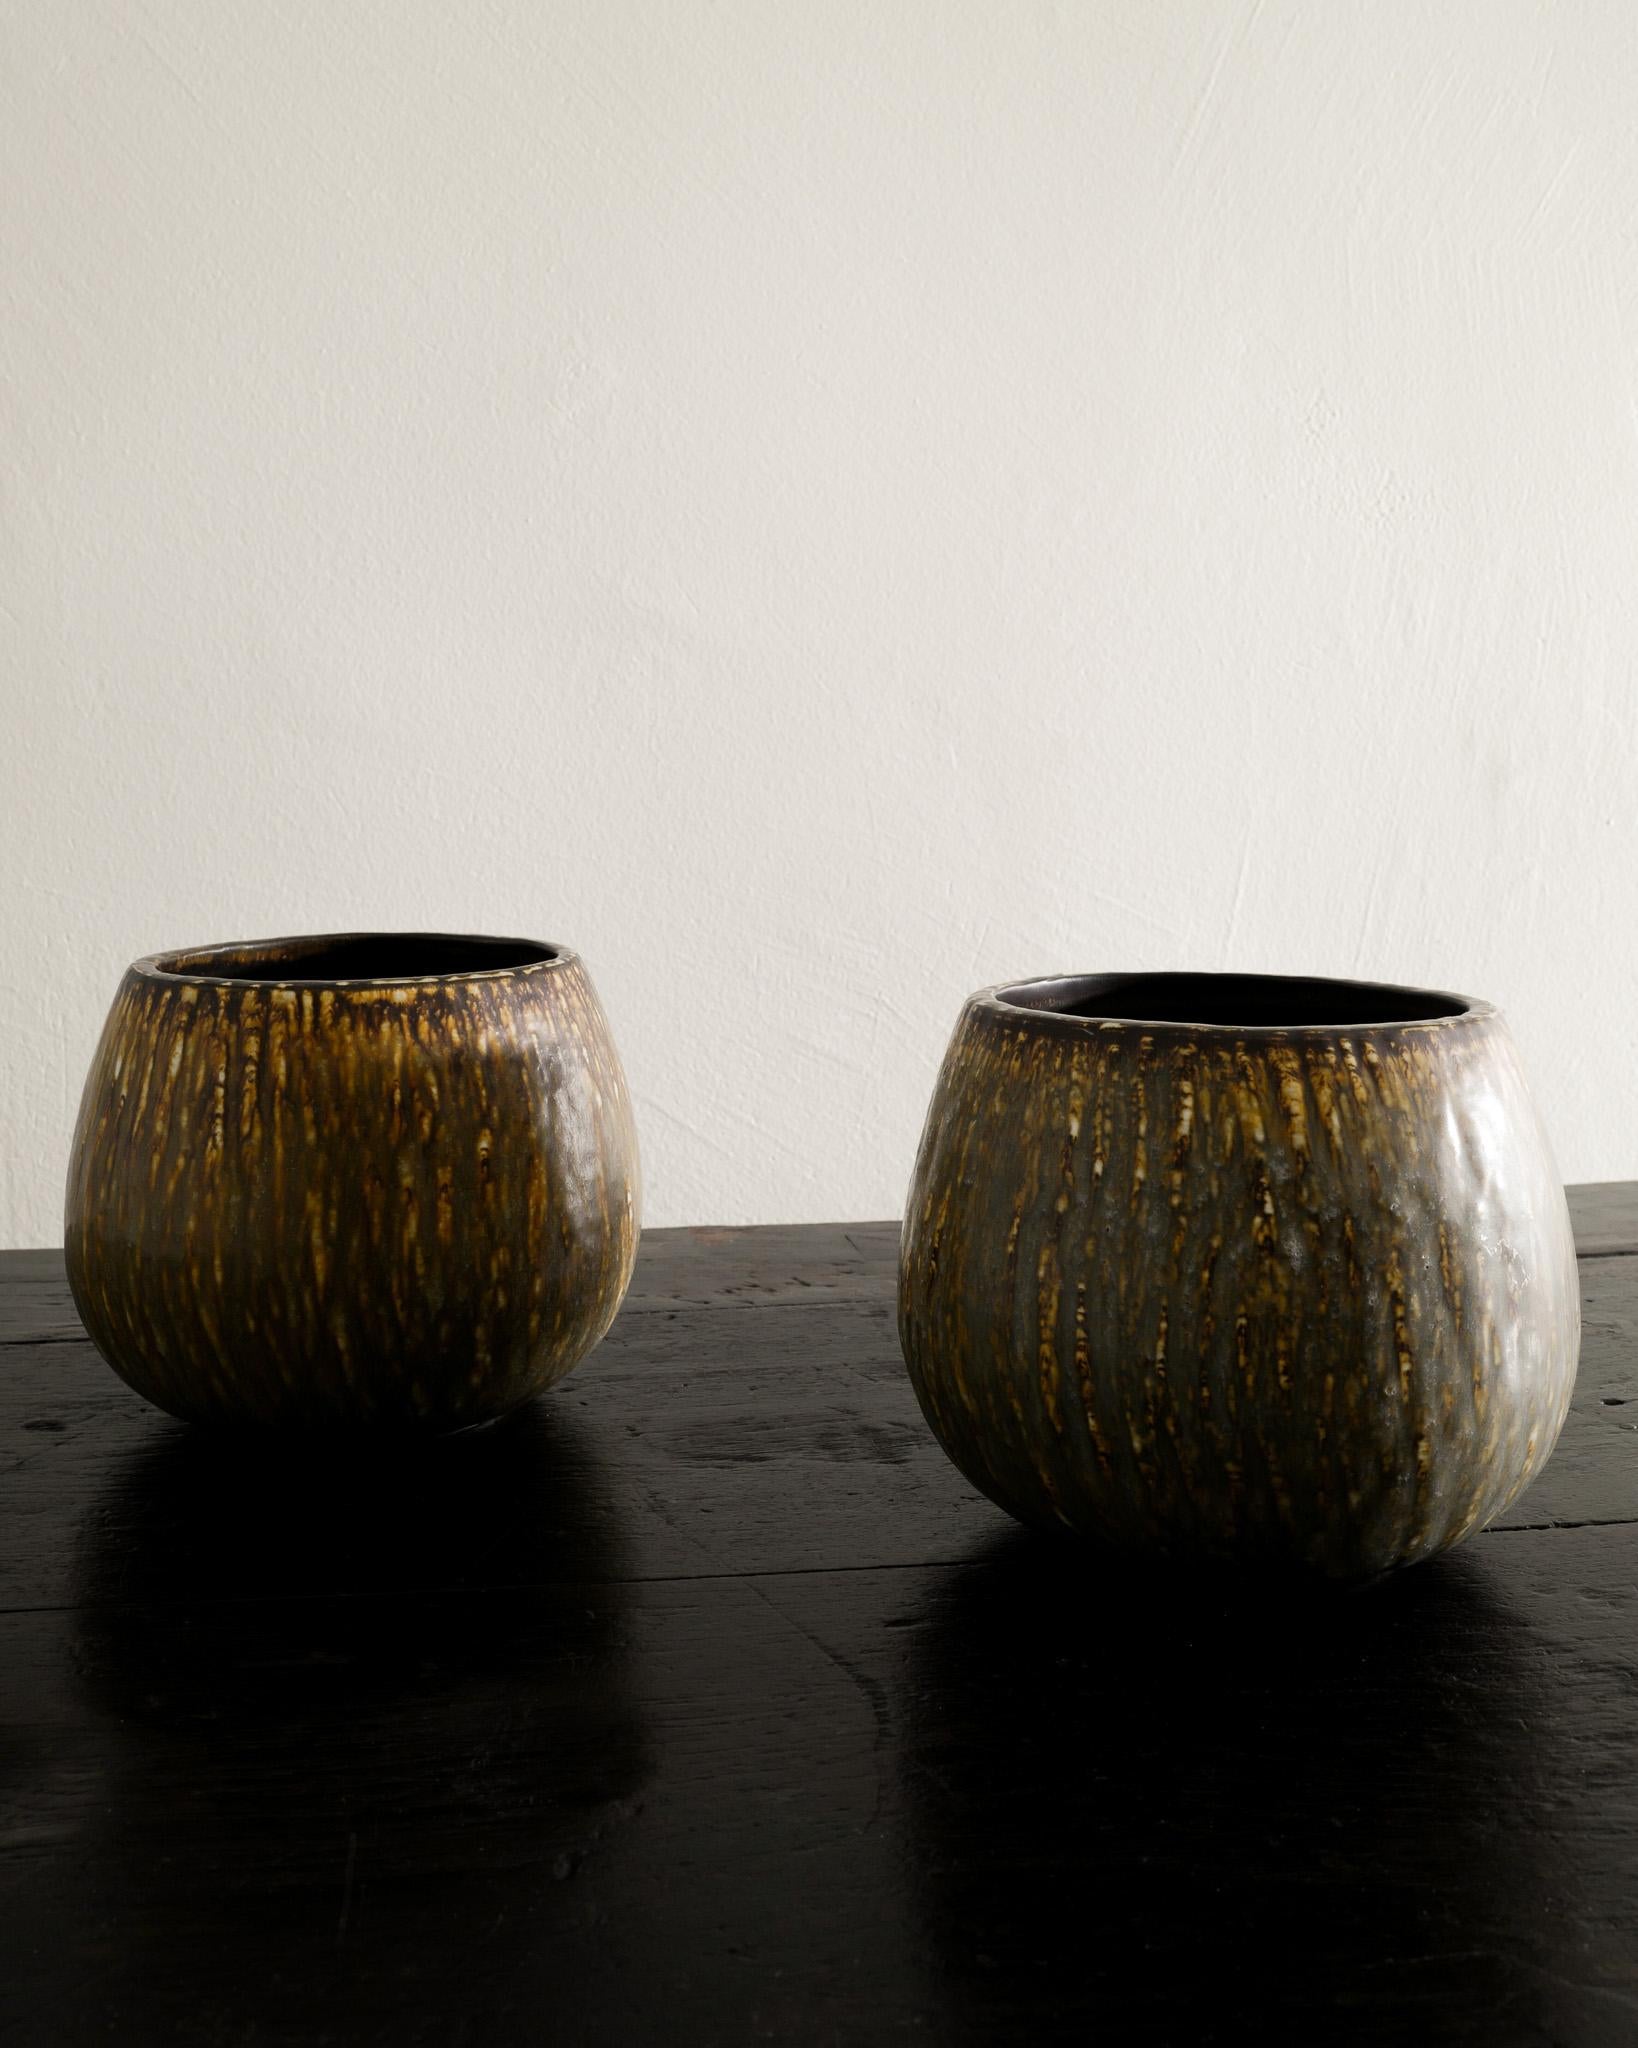 Rare mid century ceramic vases / pots from the 